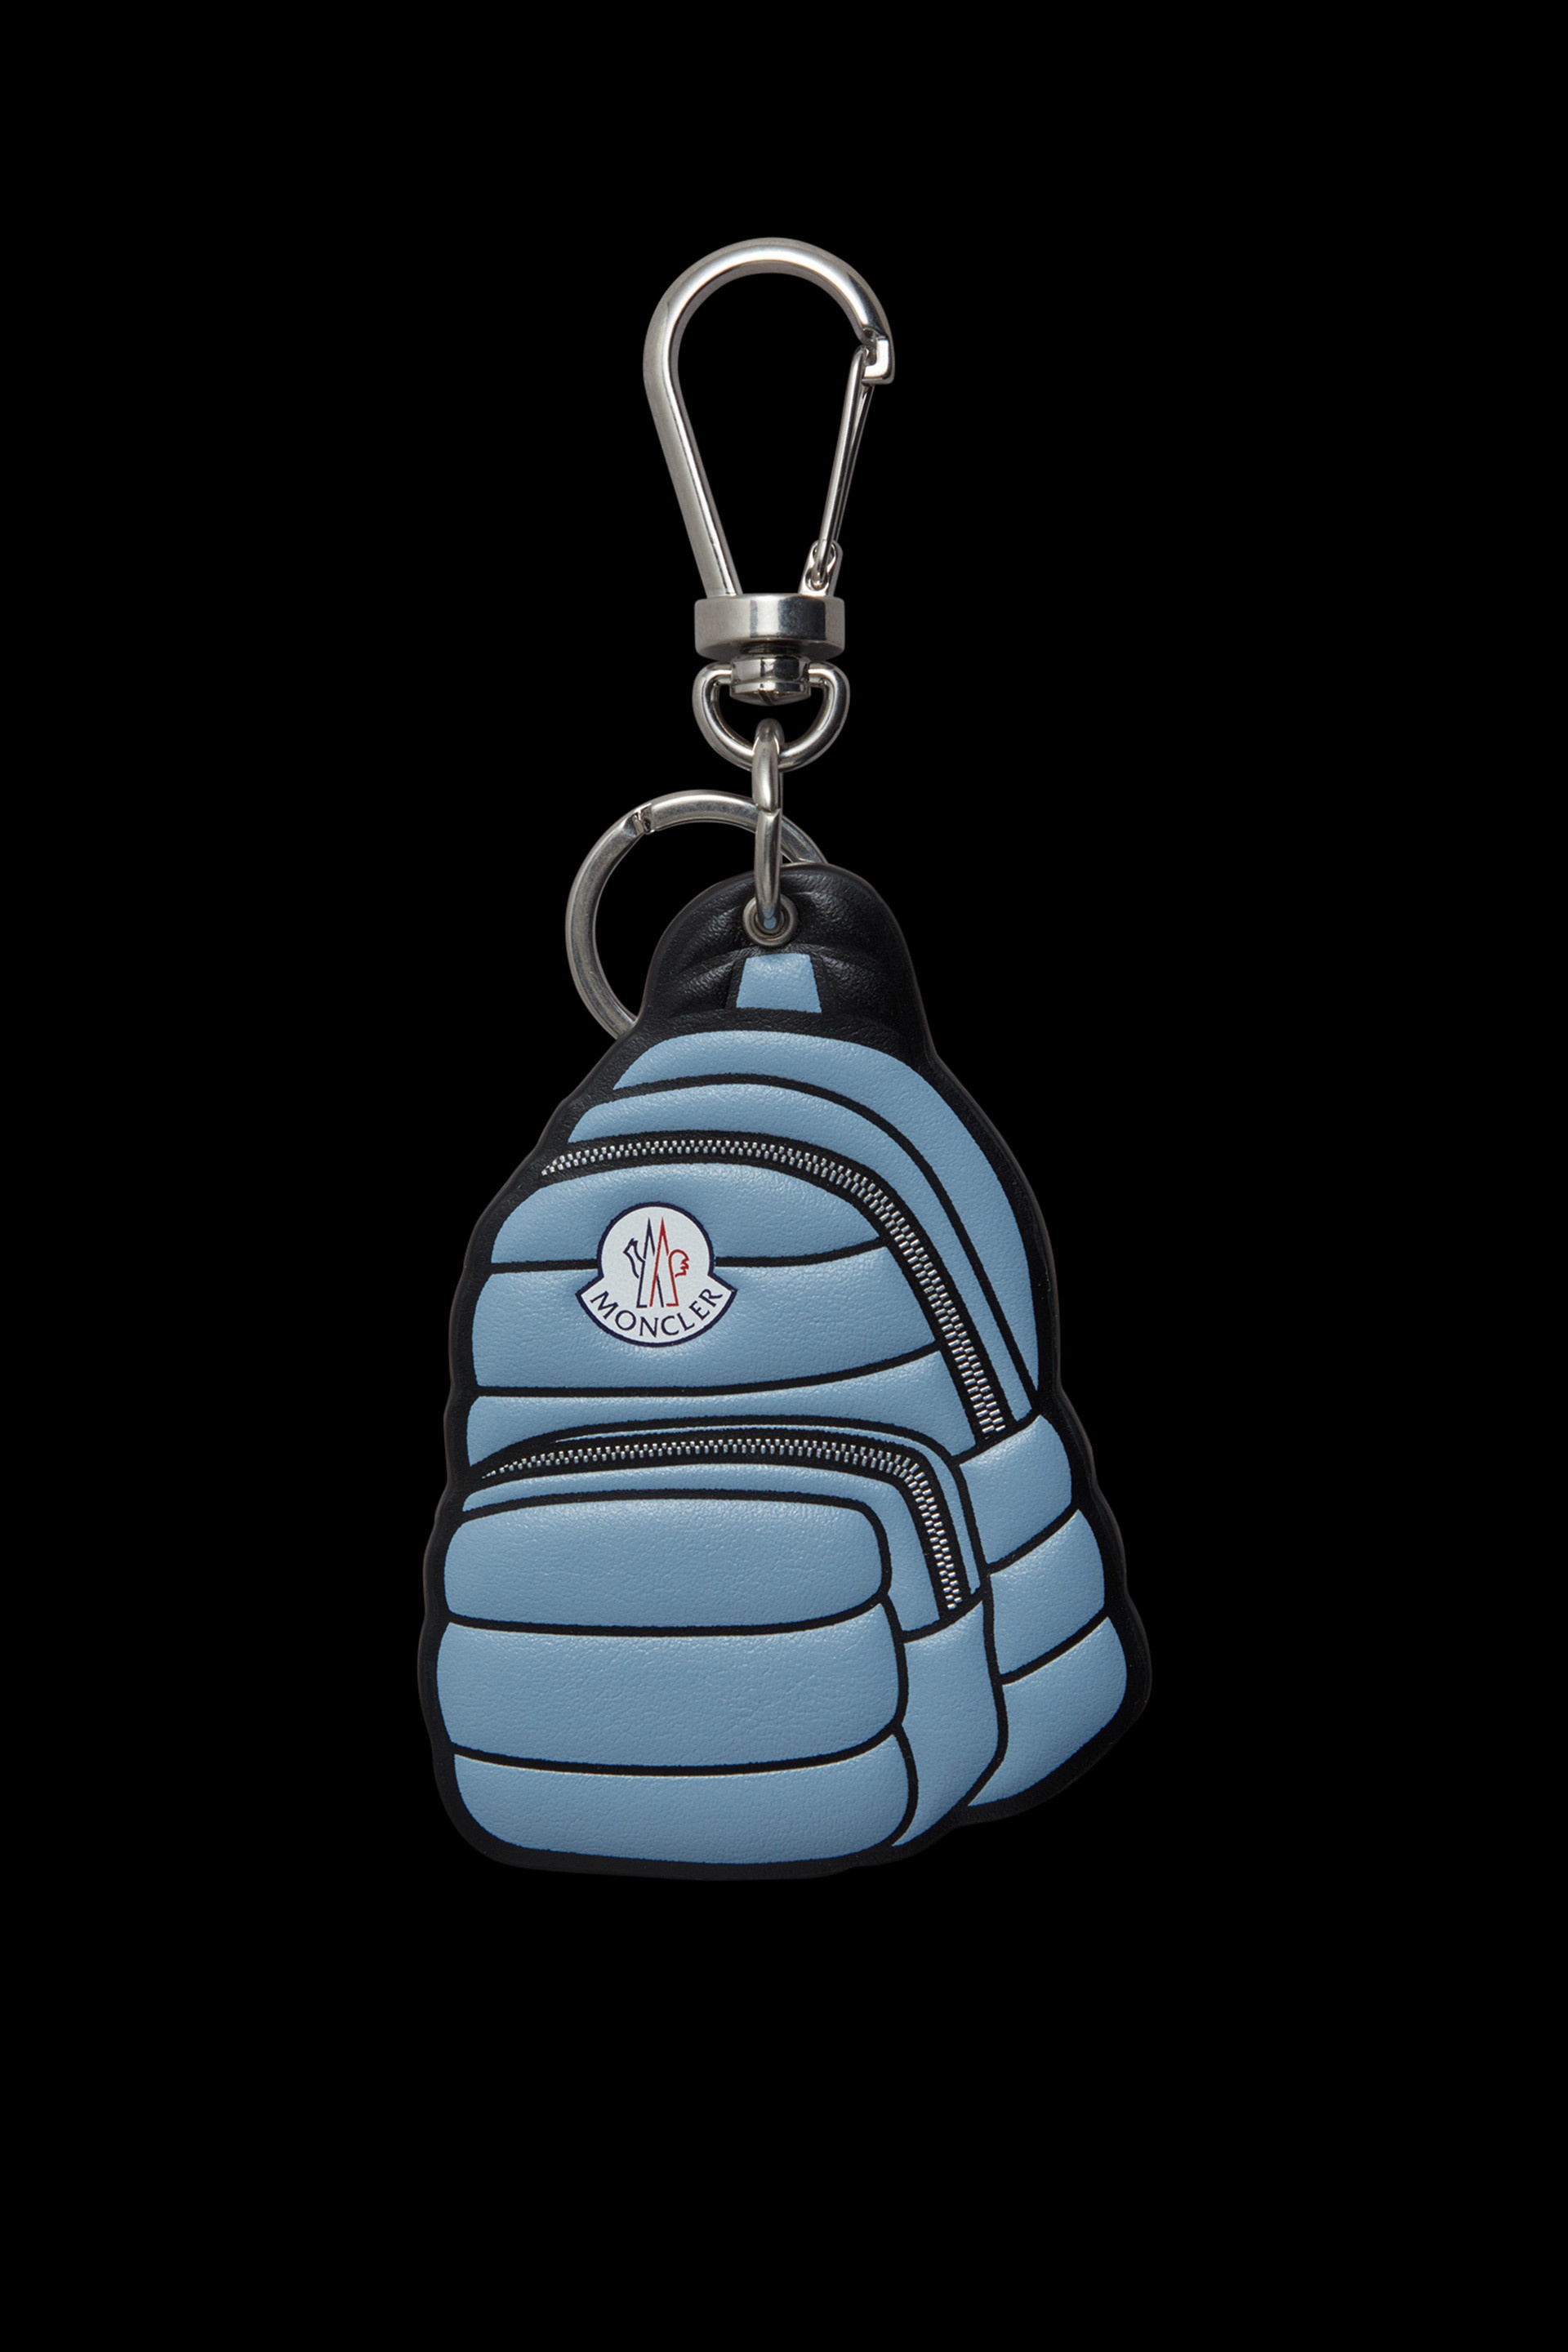 Backpack-Shaped Key Ring - 1